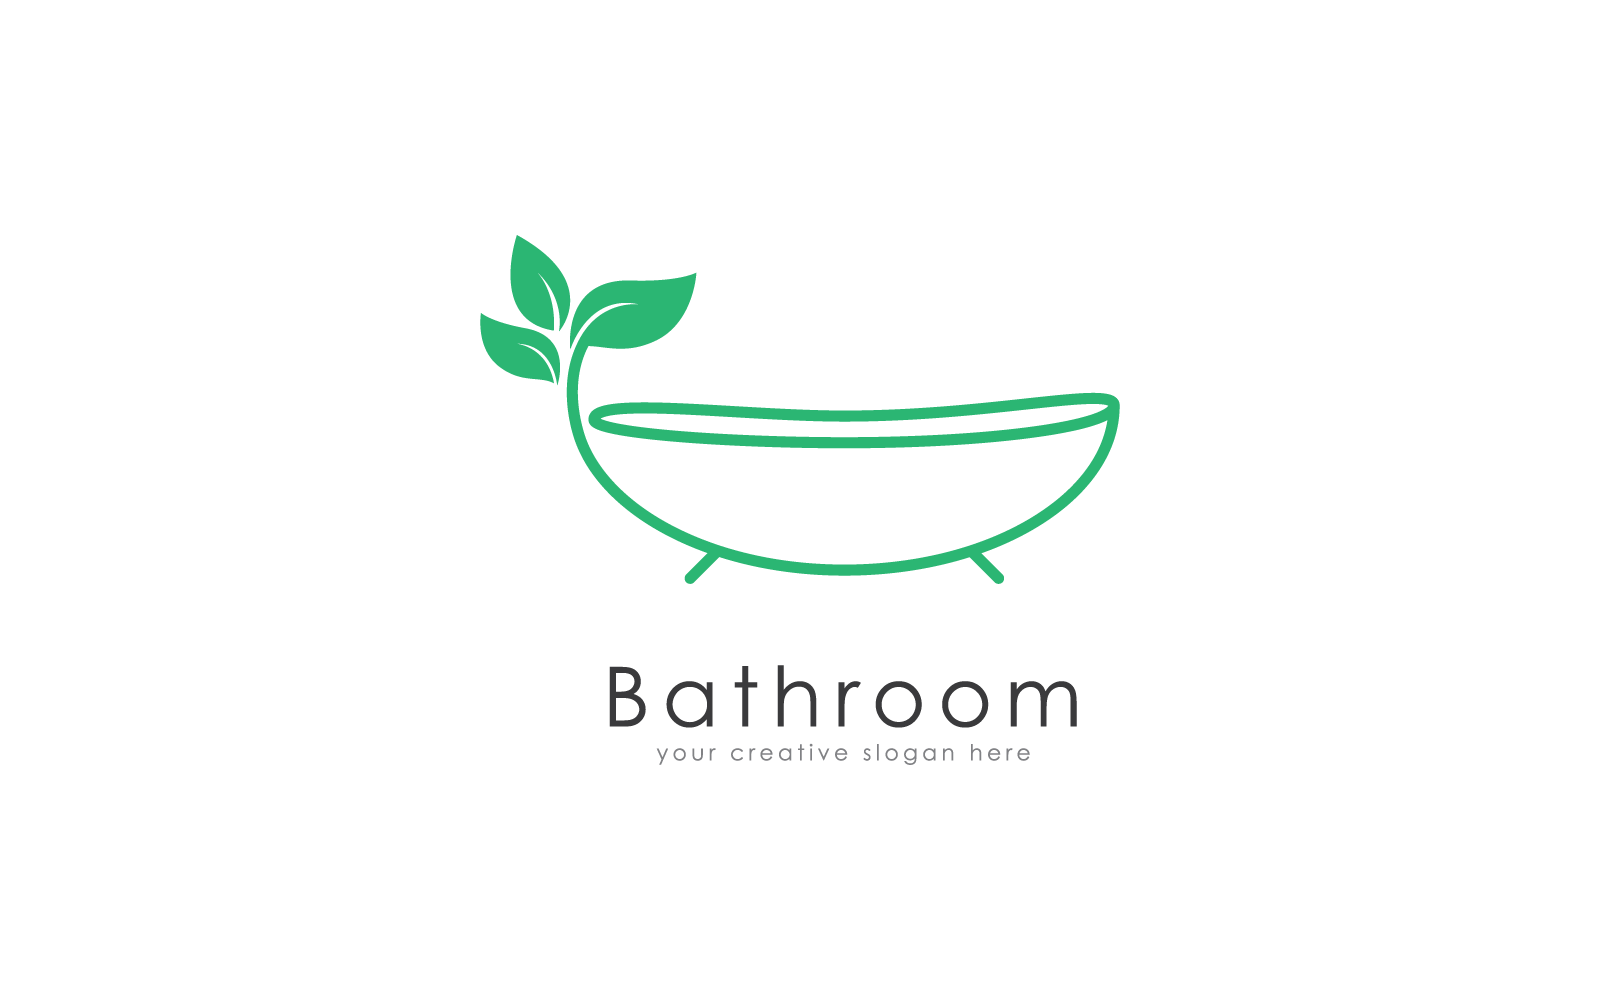 Bathtub Bathroom logo illustration icon vector flat design Logo Template